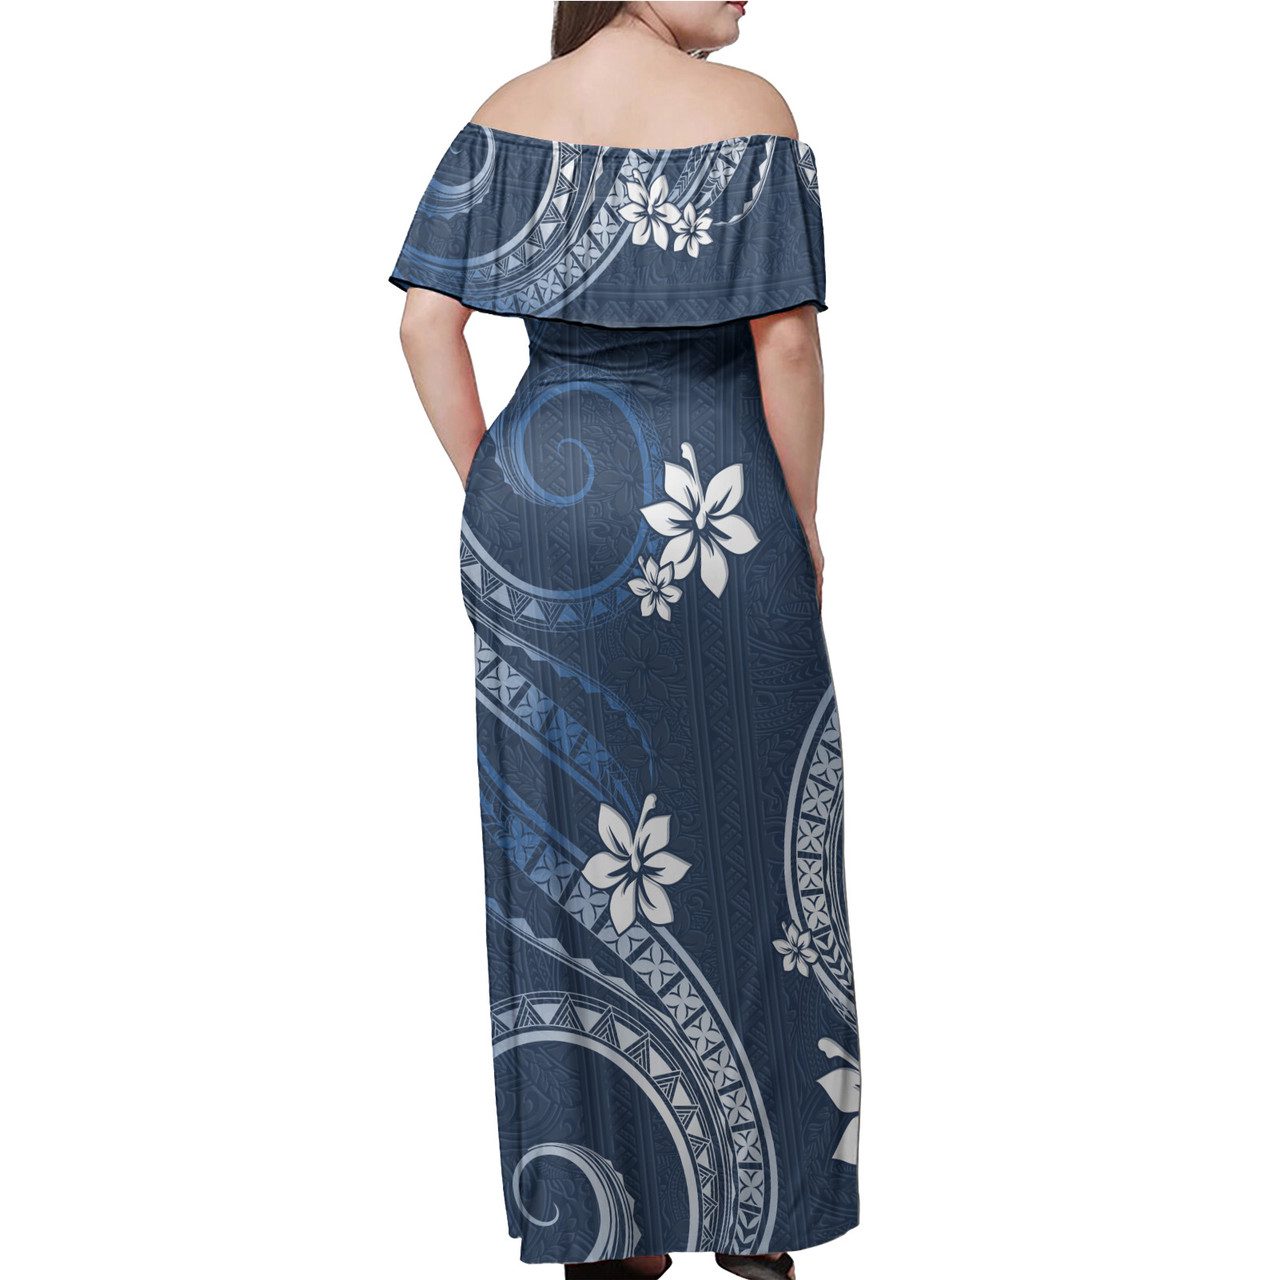 Guam Off Shoulder Long Dress White Hibiscus Blue Pattern